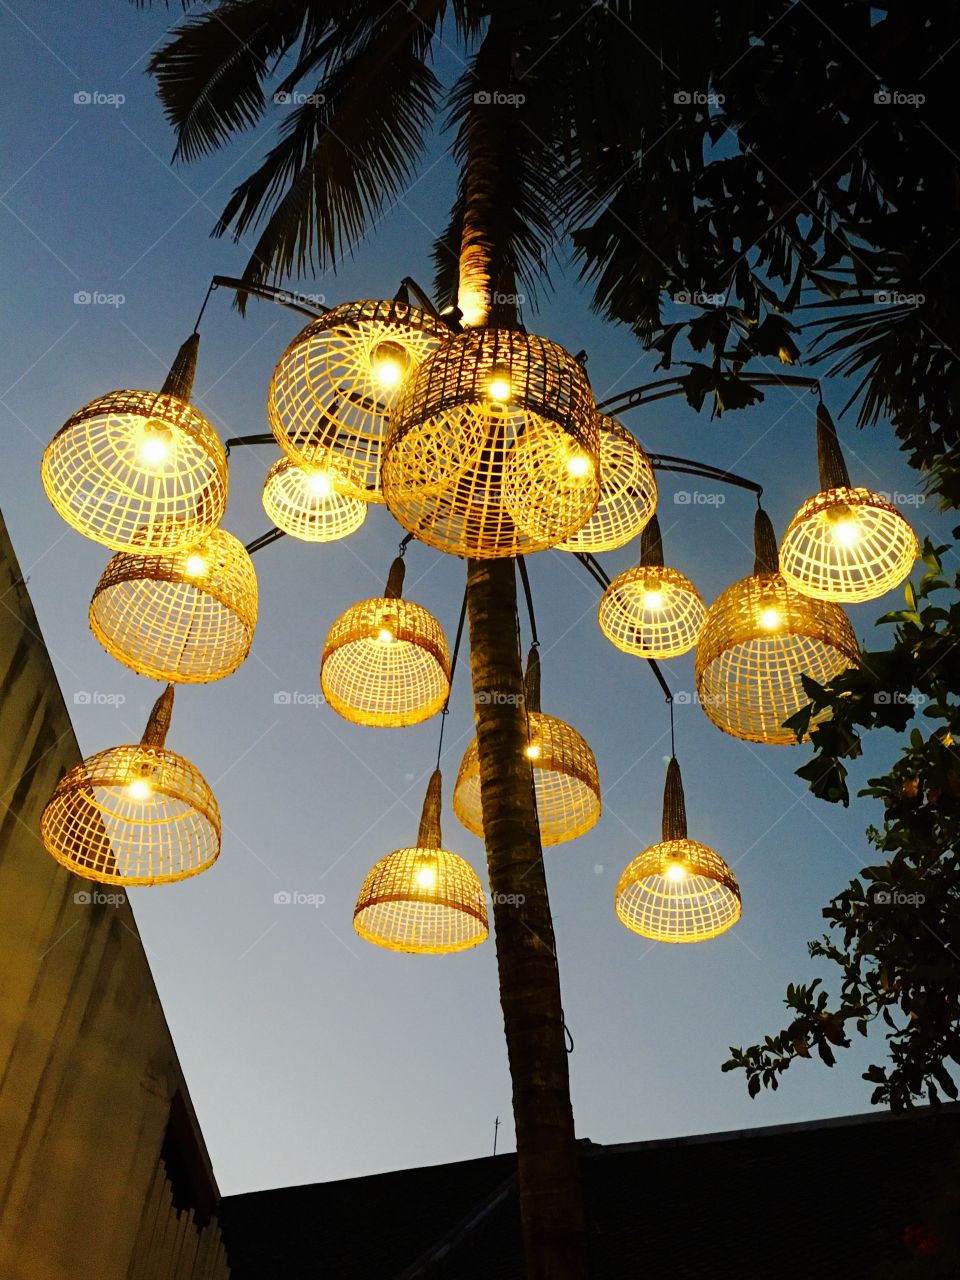 Lighting at Palm tree